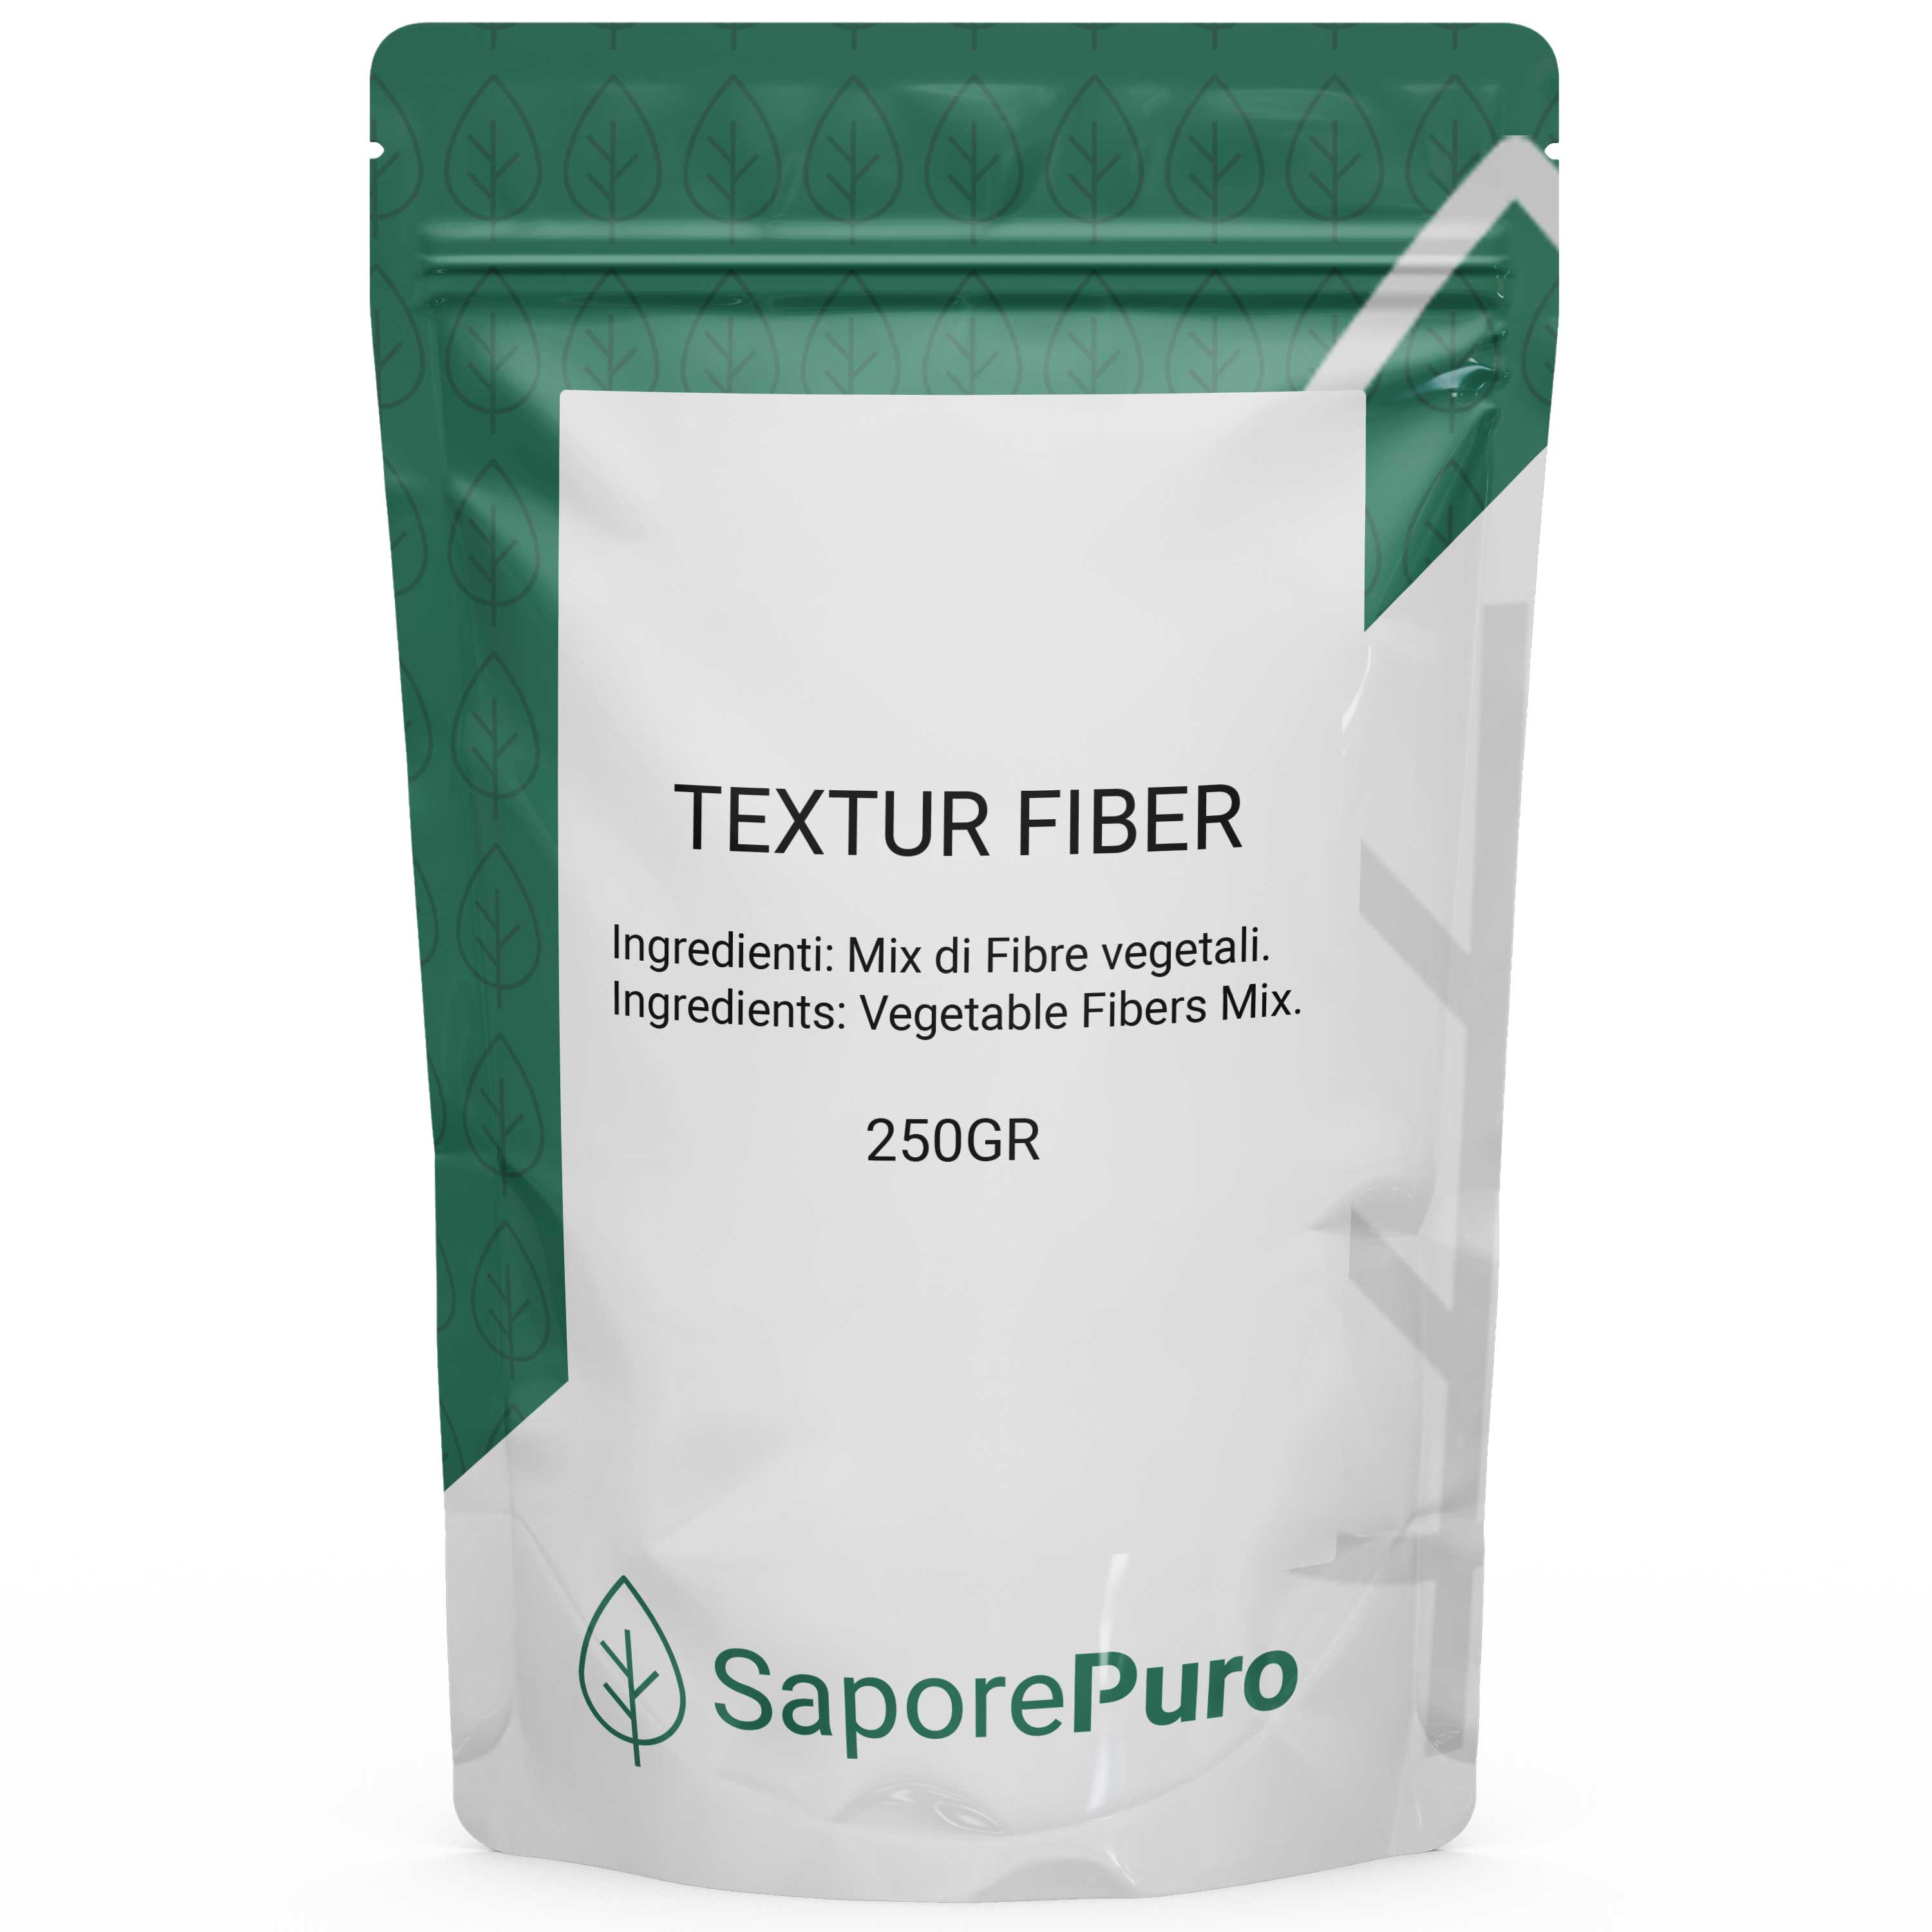 Textur Fiber - 250gr - Mix di Fibre Vegetali per gelati senza additivi ed impasti gluten free - SaporePuro